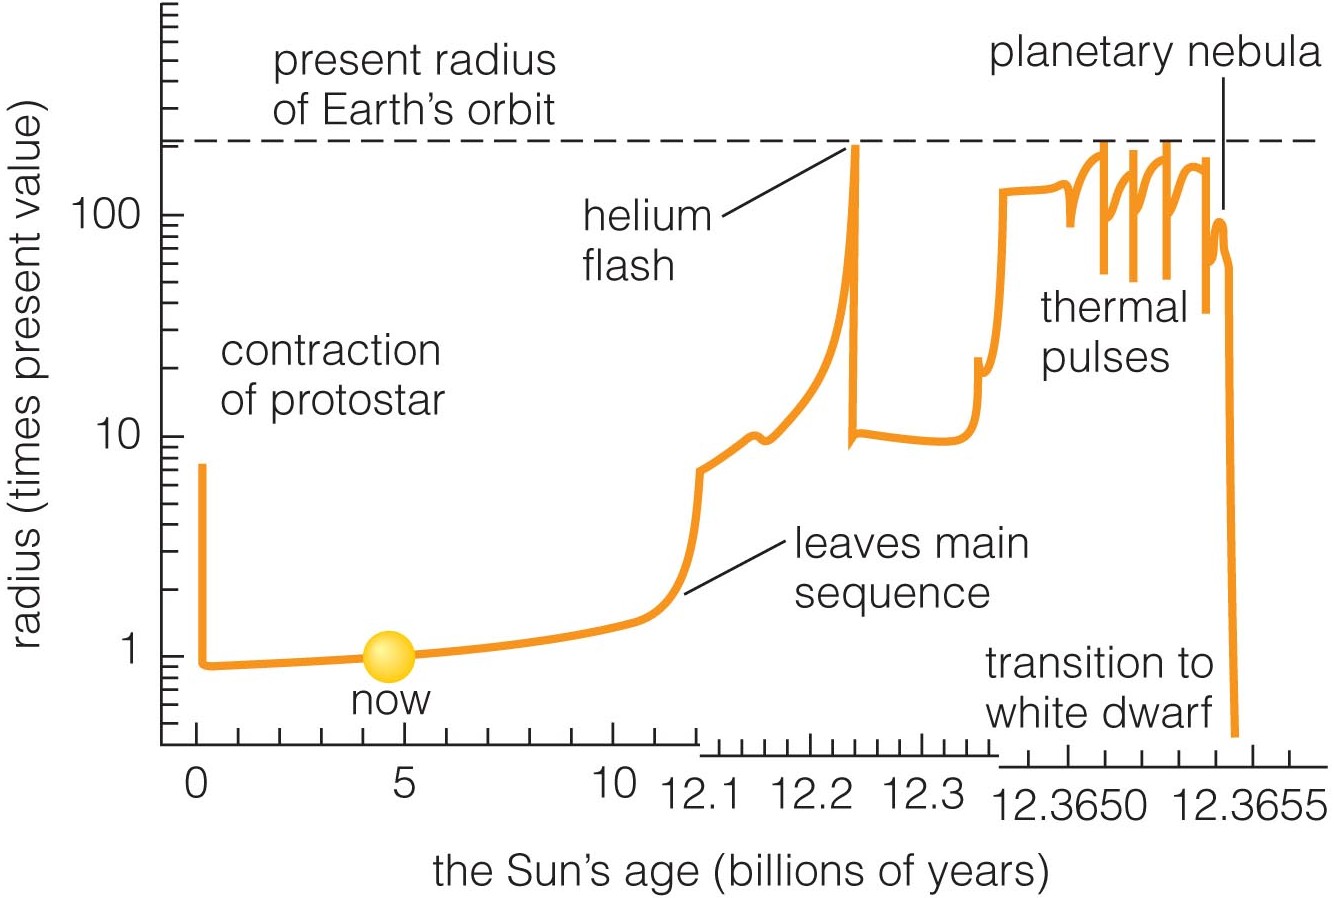 Evolution of the radius of the Sun